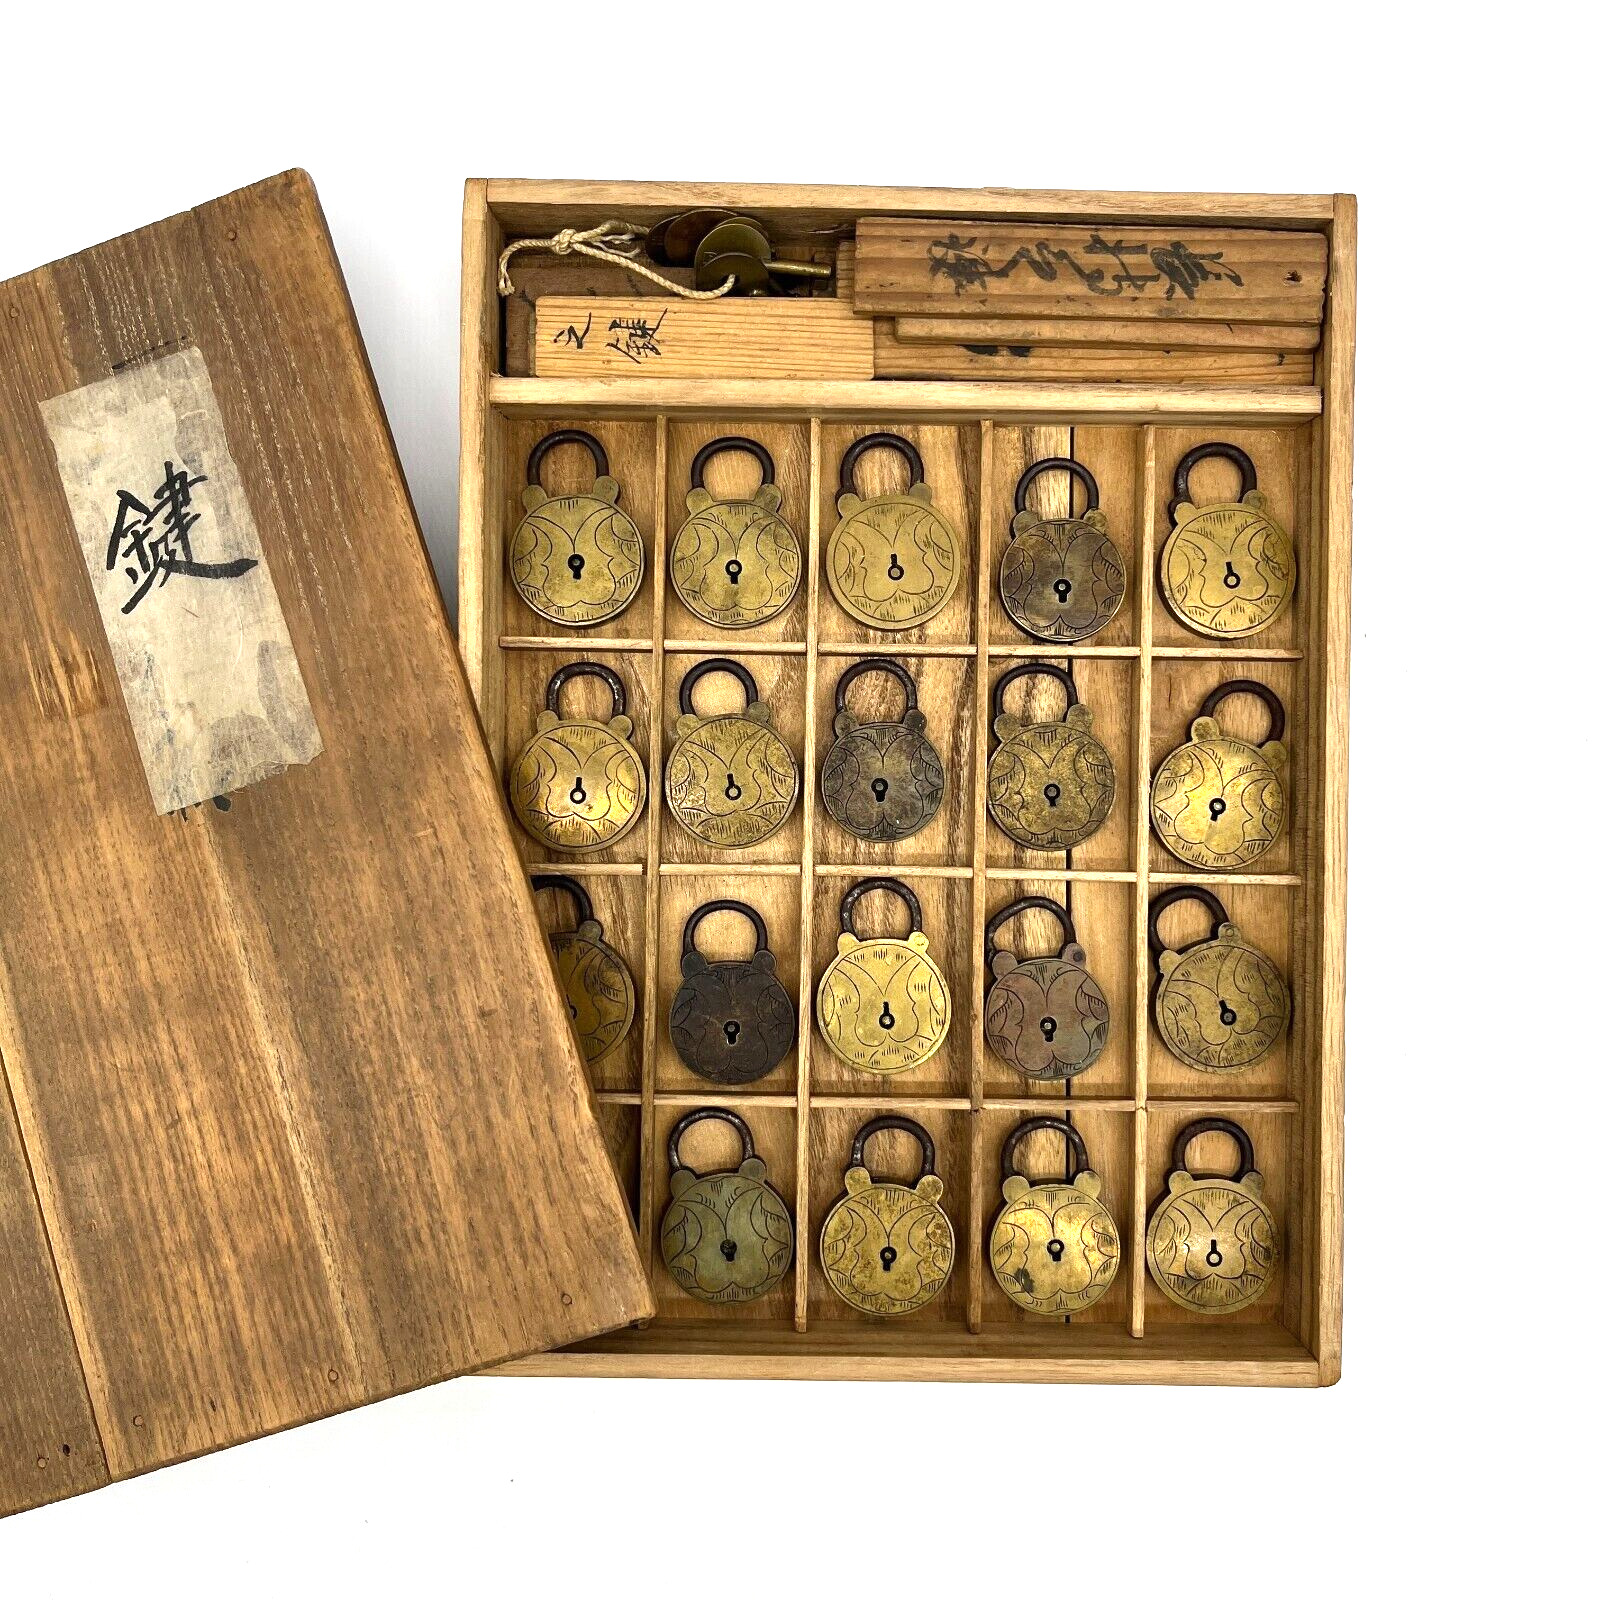 [Rare] Antique Japanese Brass Padlock Set in Wooden Box - Collectible Locks